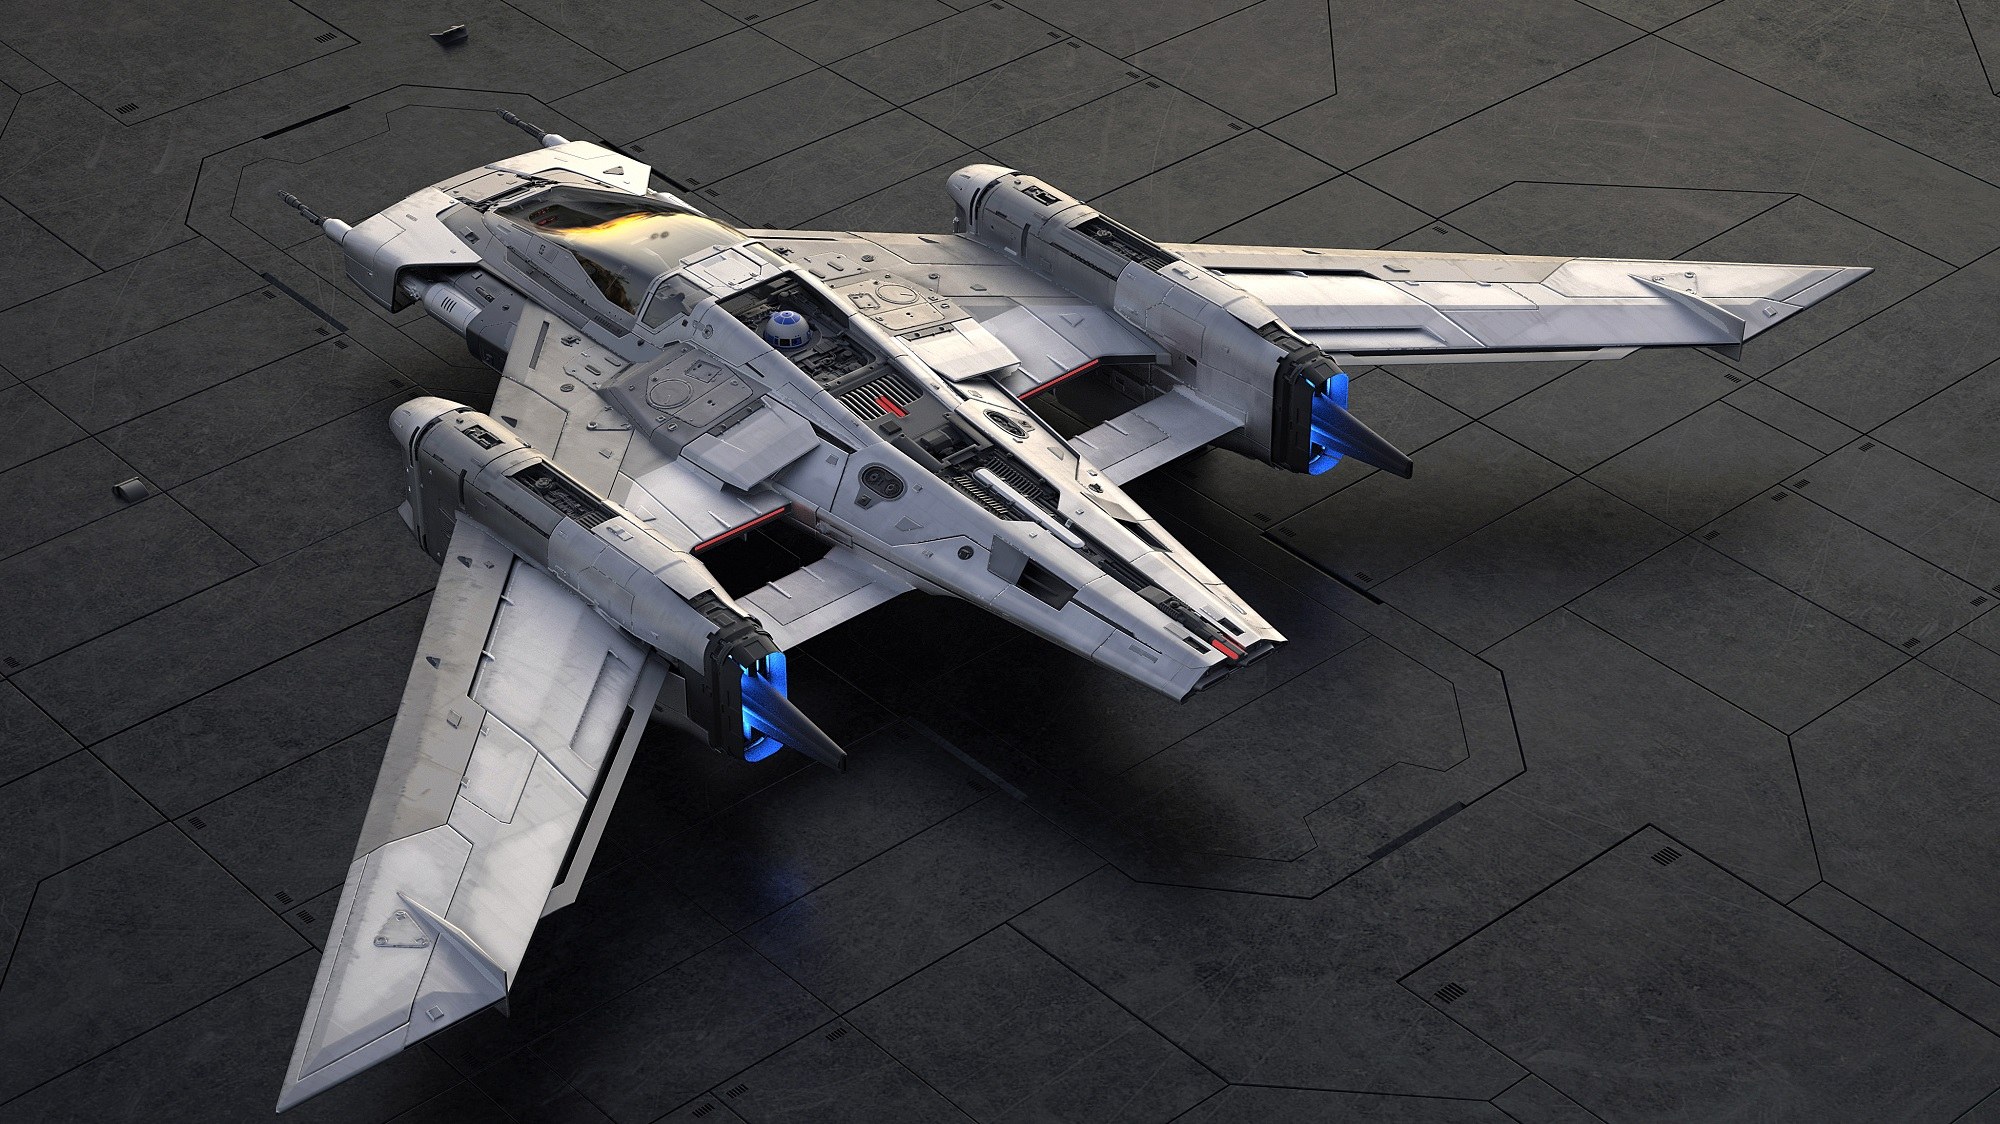 Porsche and Lucasfilm partner on new Star Wars ship